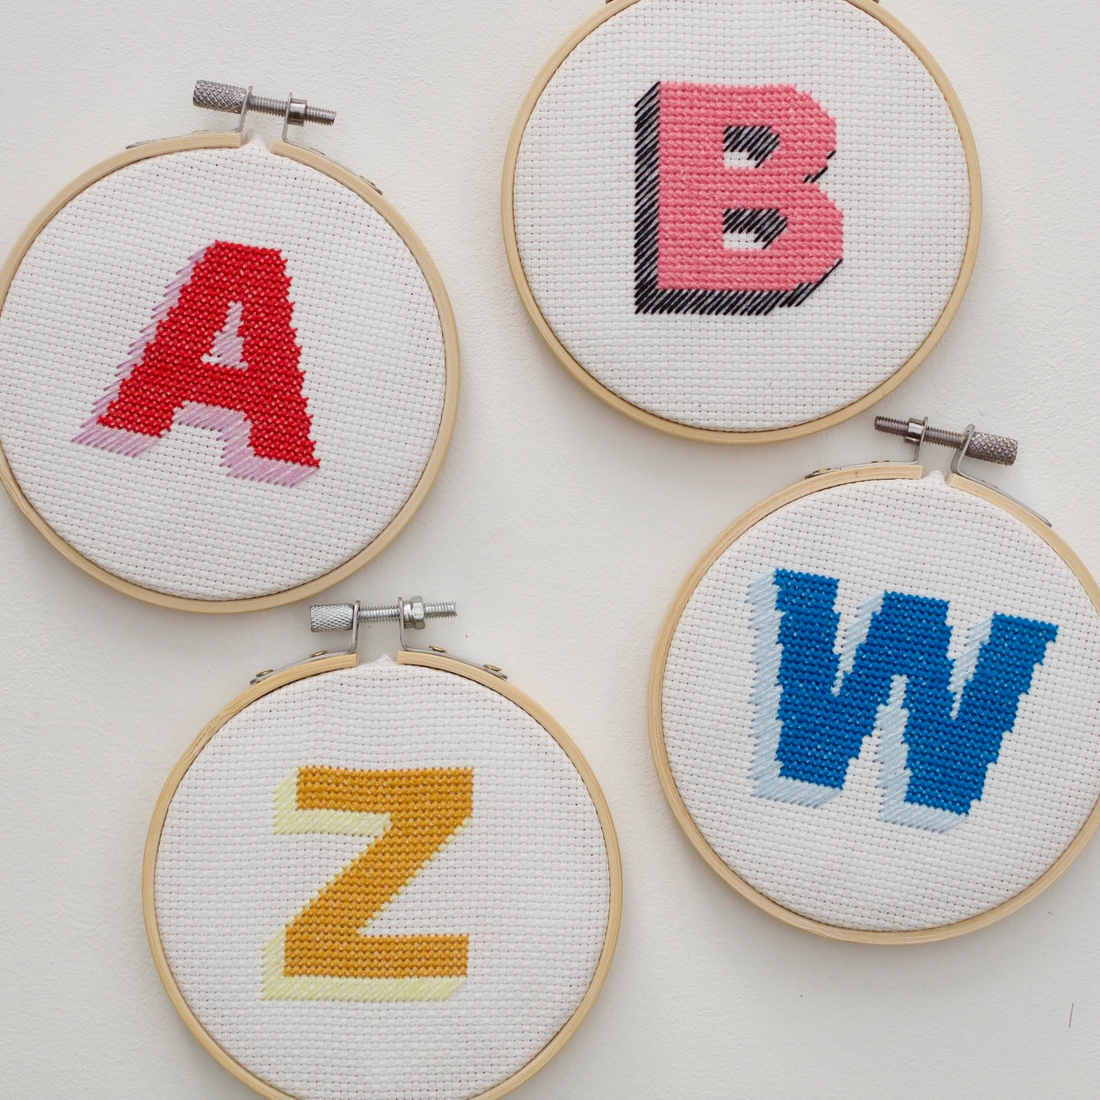 Drop Shadow Alphabet Cross Stitch Kit Embroidery Kit